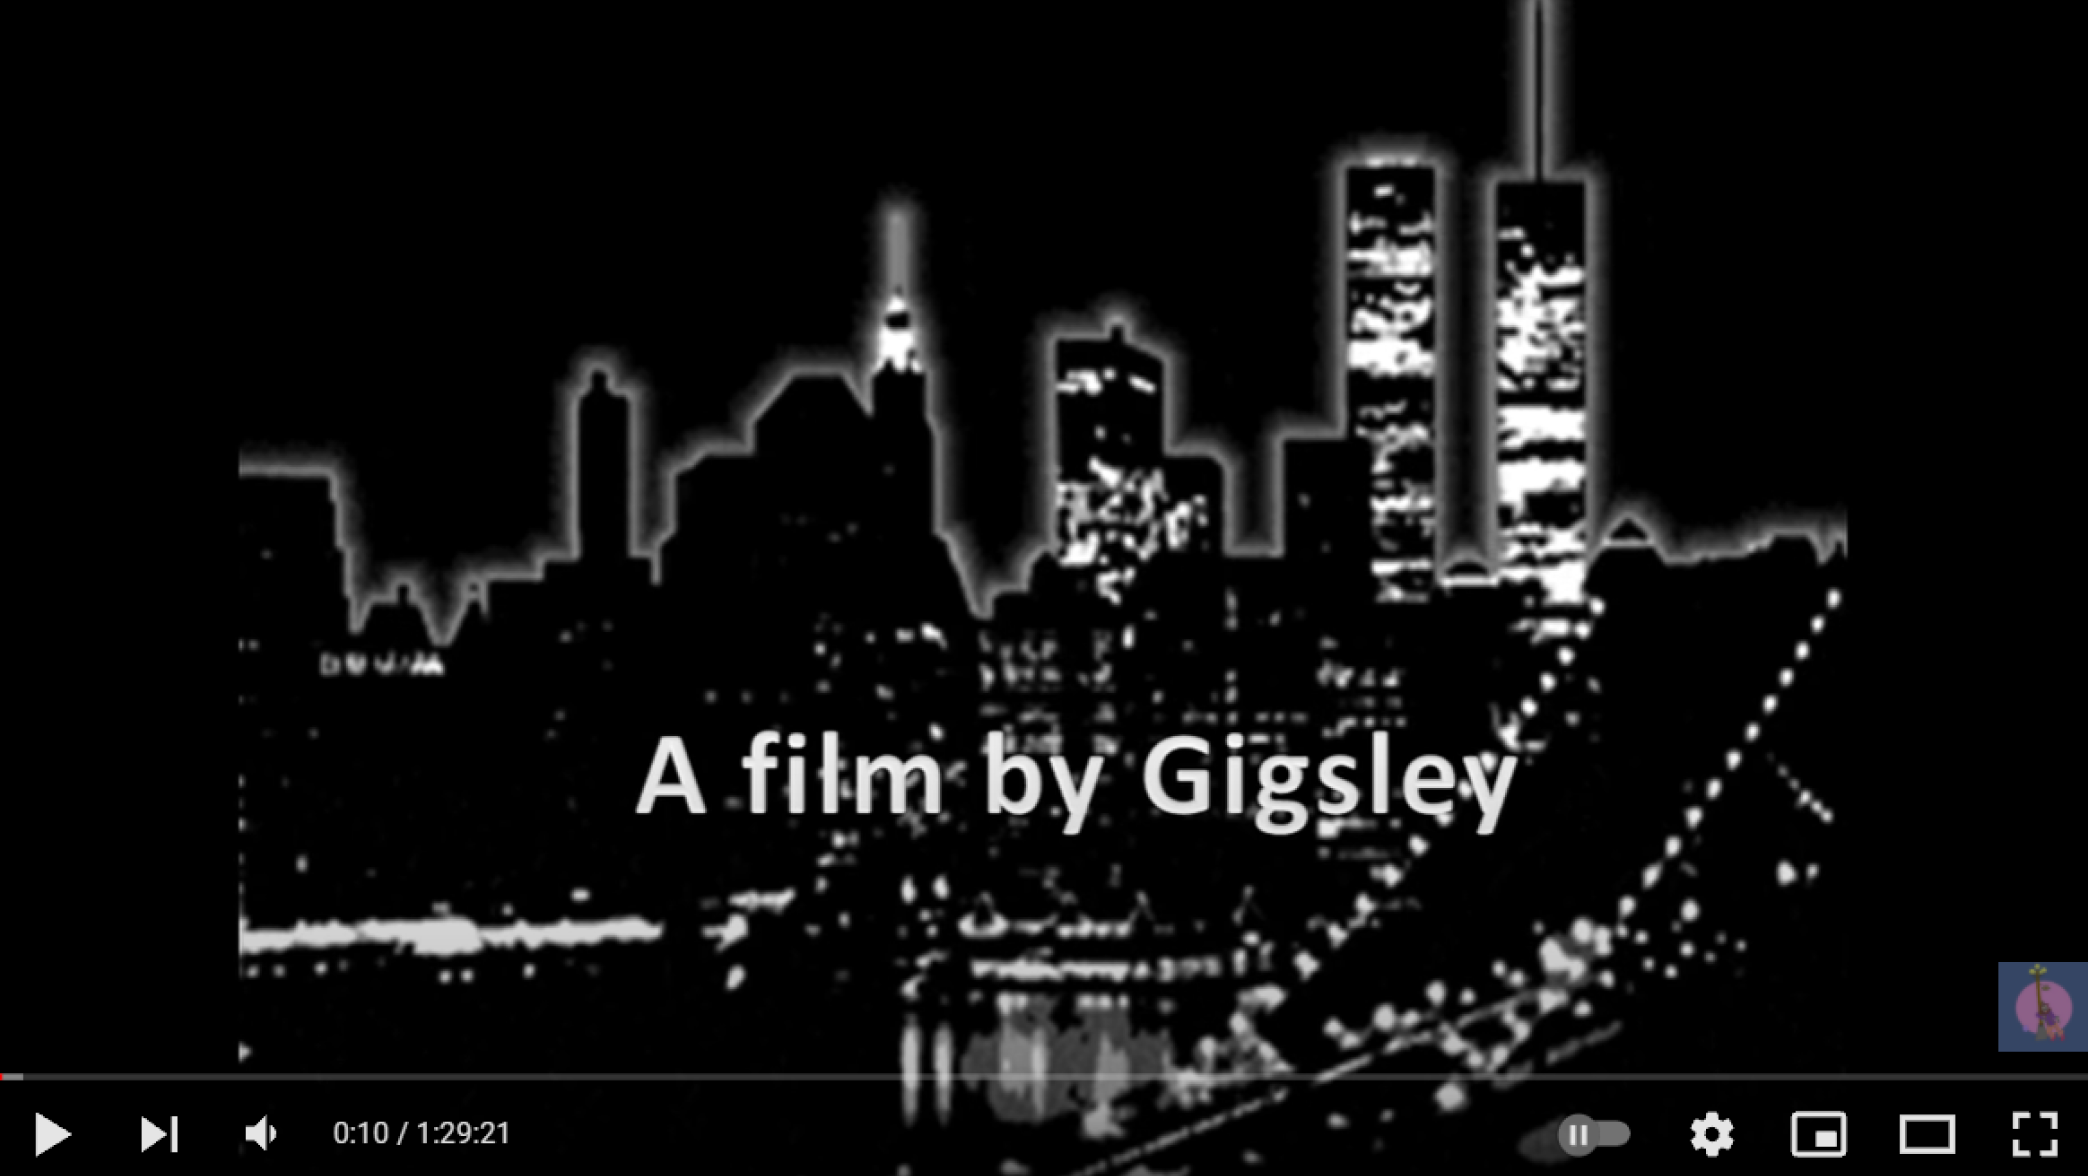 Screenshot of Gigsley's documentary